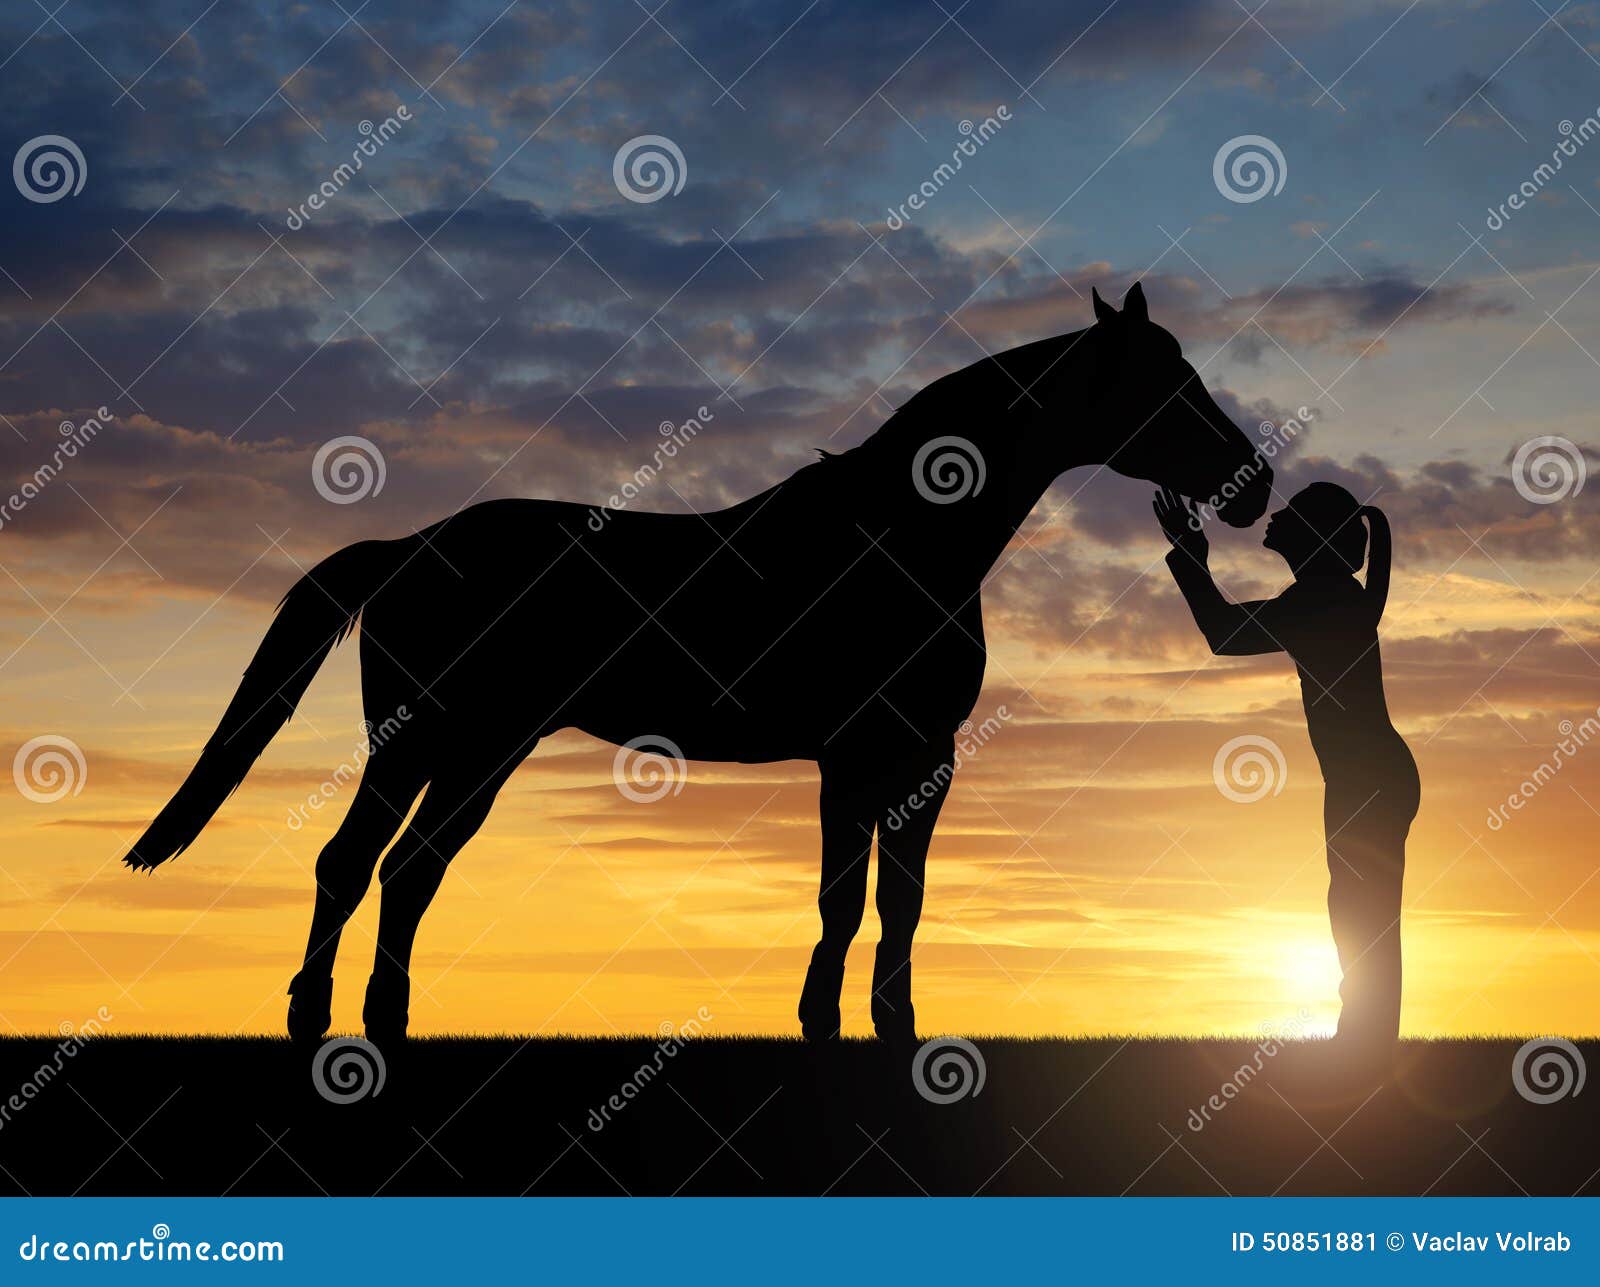 girl giving a kiss horse